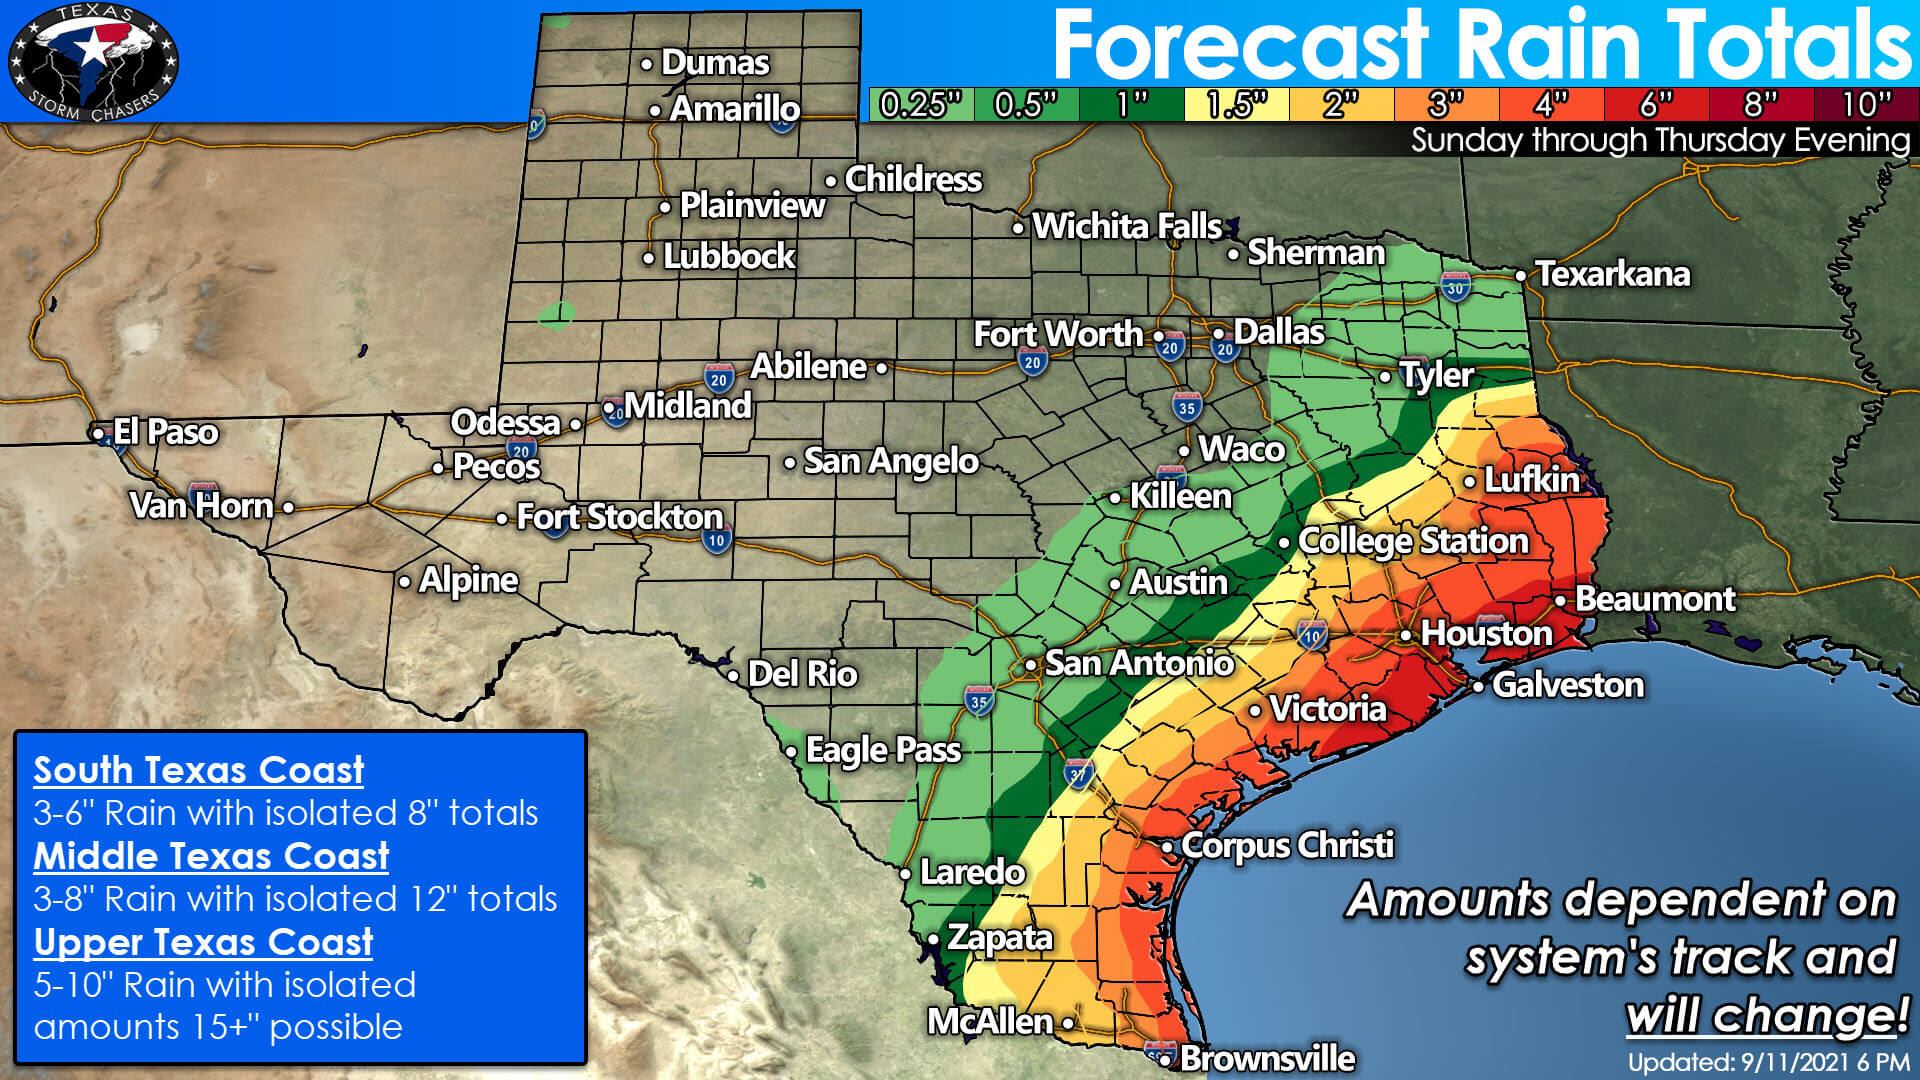 Tropical Storm likely to impact Texas Coast with heavy rain Monday-Thursday